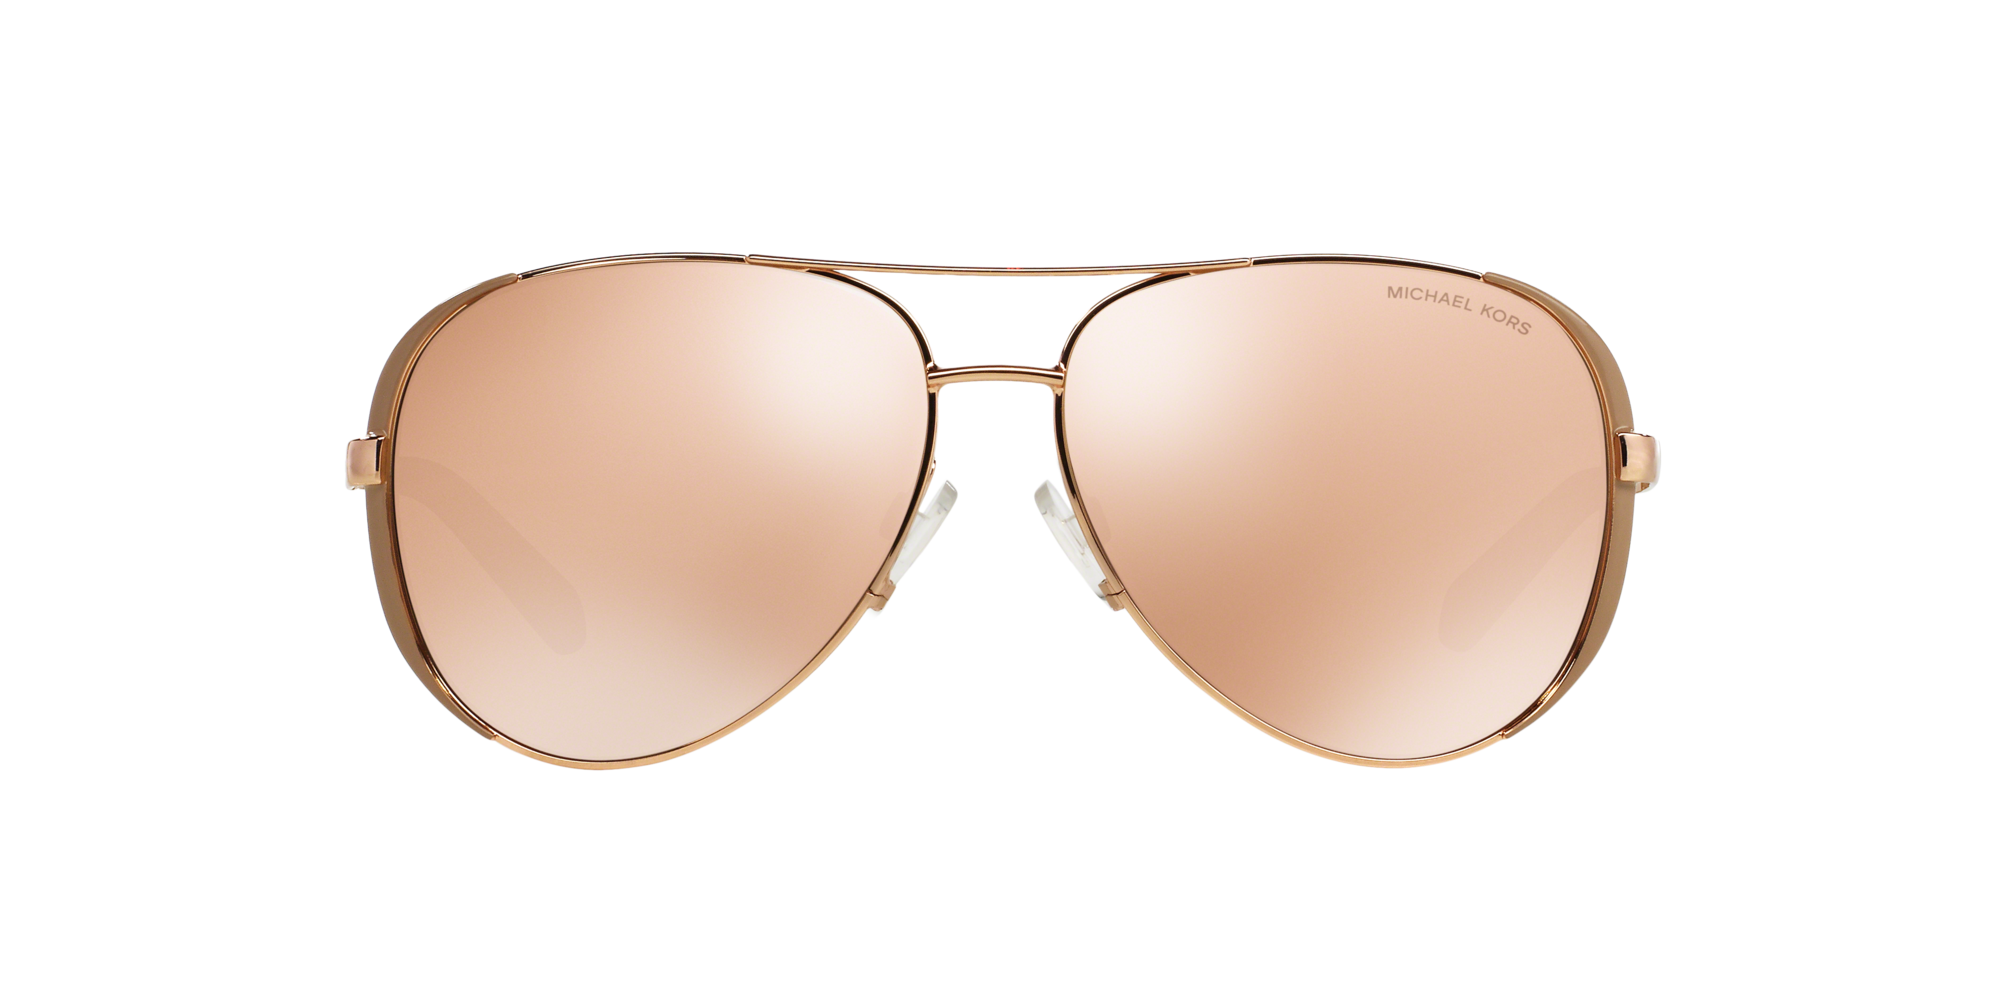 michael kors reflective sunglasses